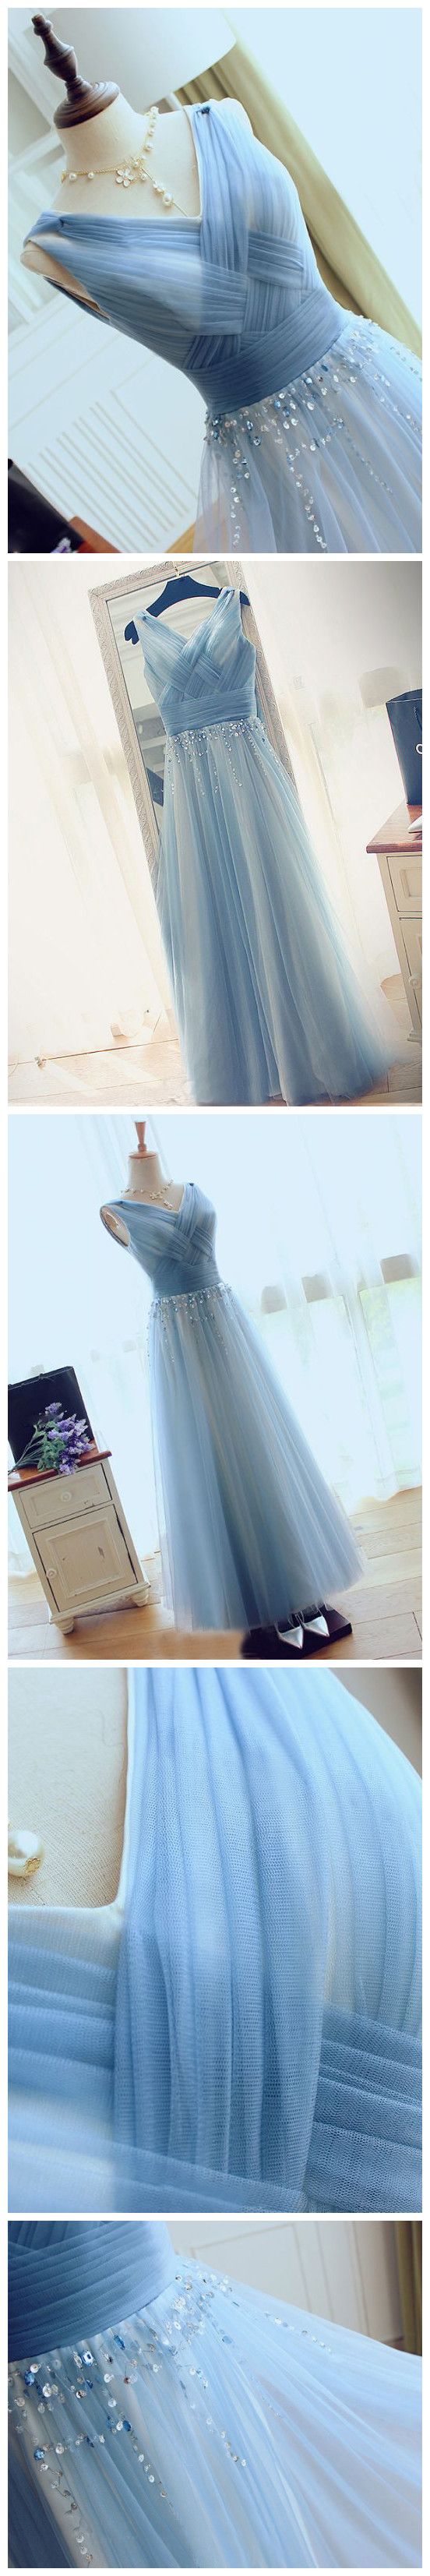 2018 Chic Prom Dress A-line V-neck Blue Tulle Evening Dress. M0692